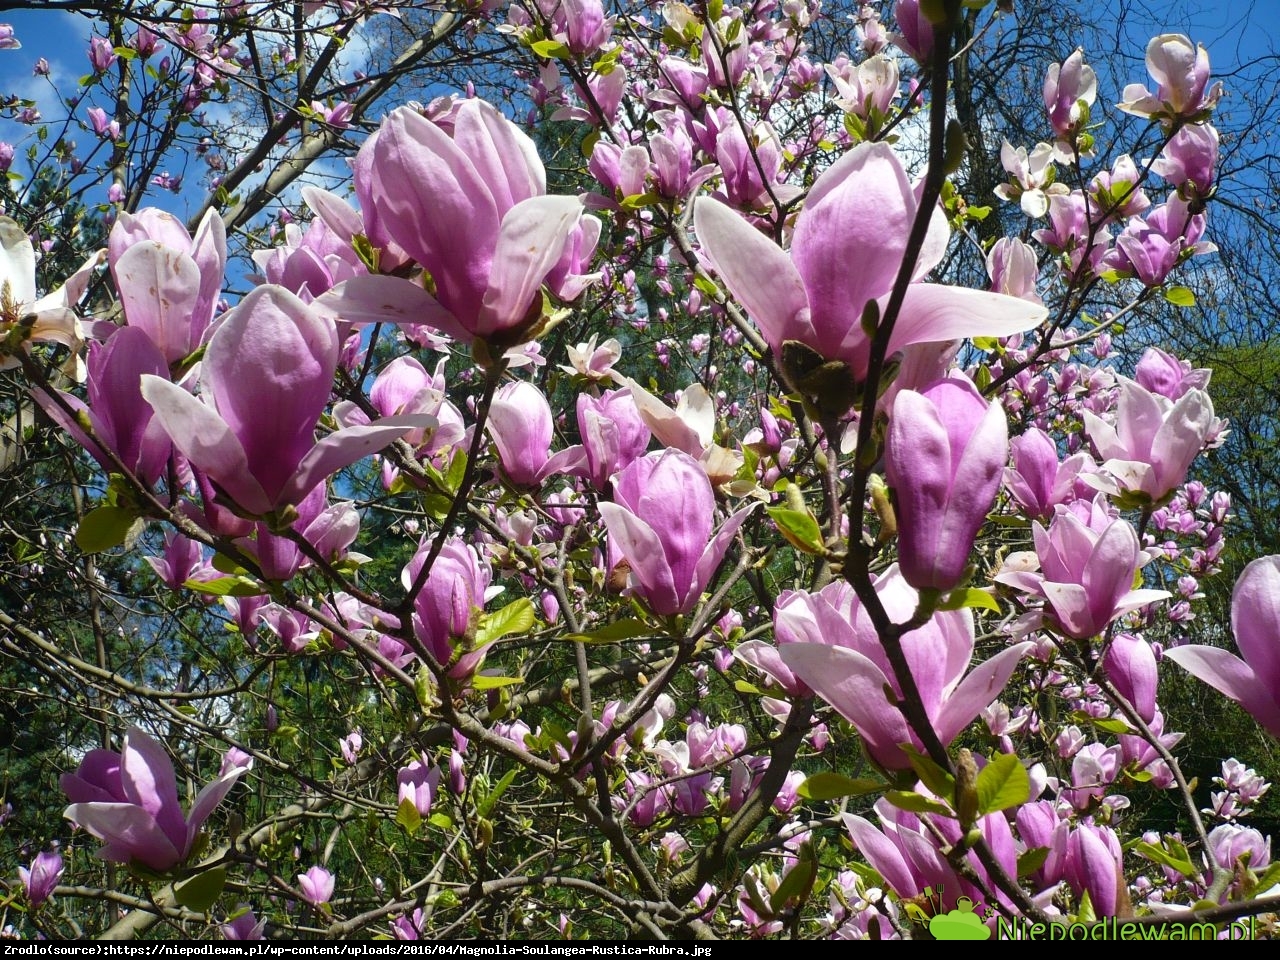 Magnolia Rustica Rubra - Magnolia soul. Rustica Rubra